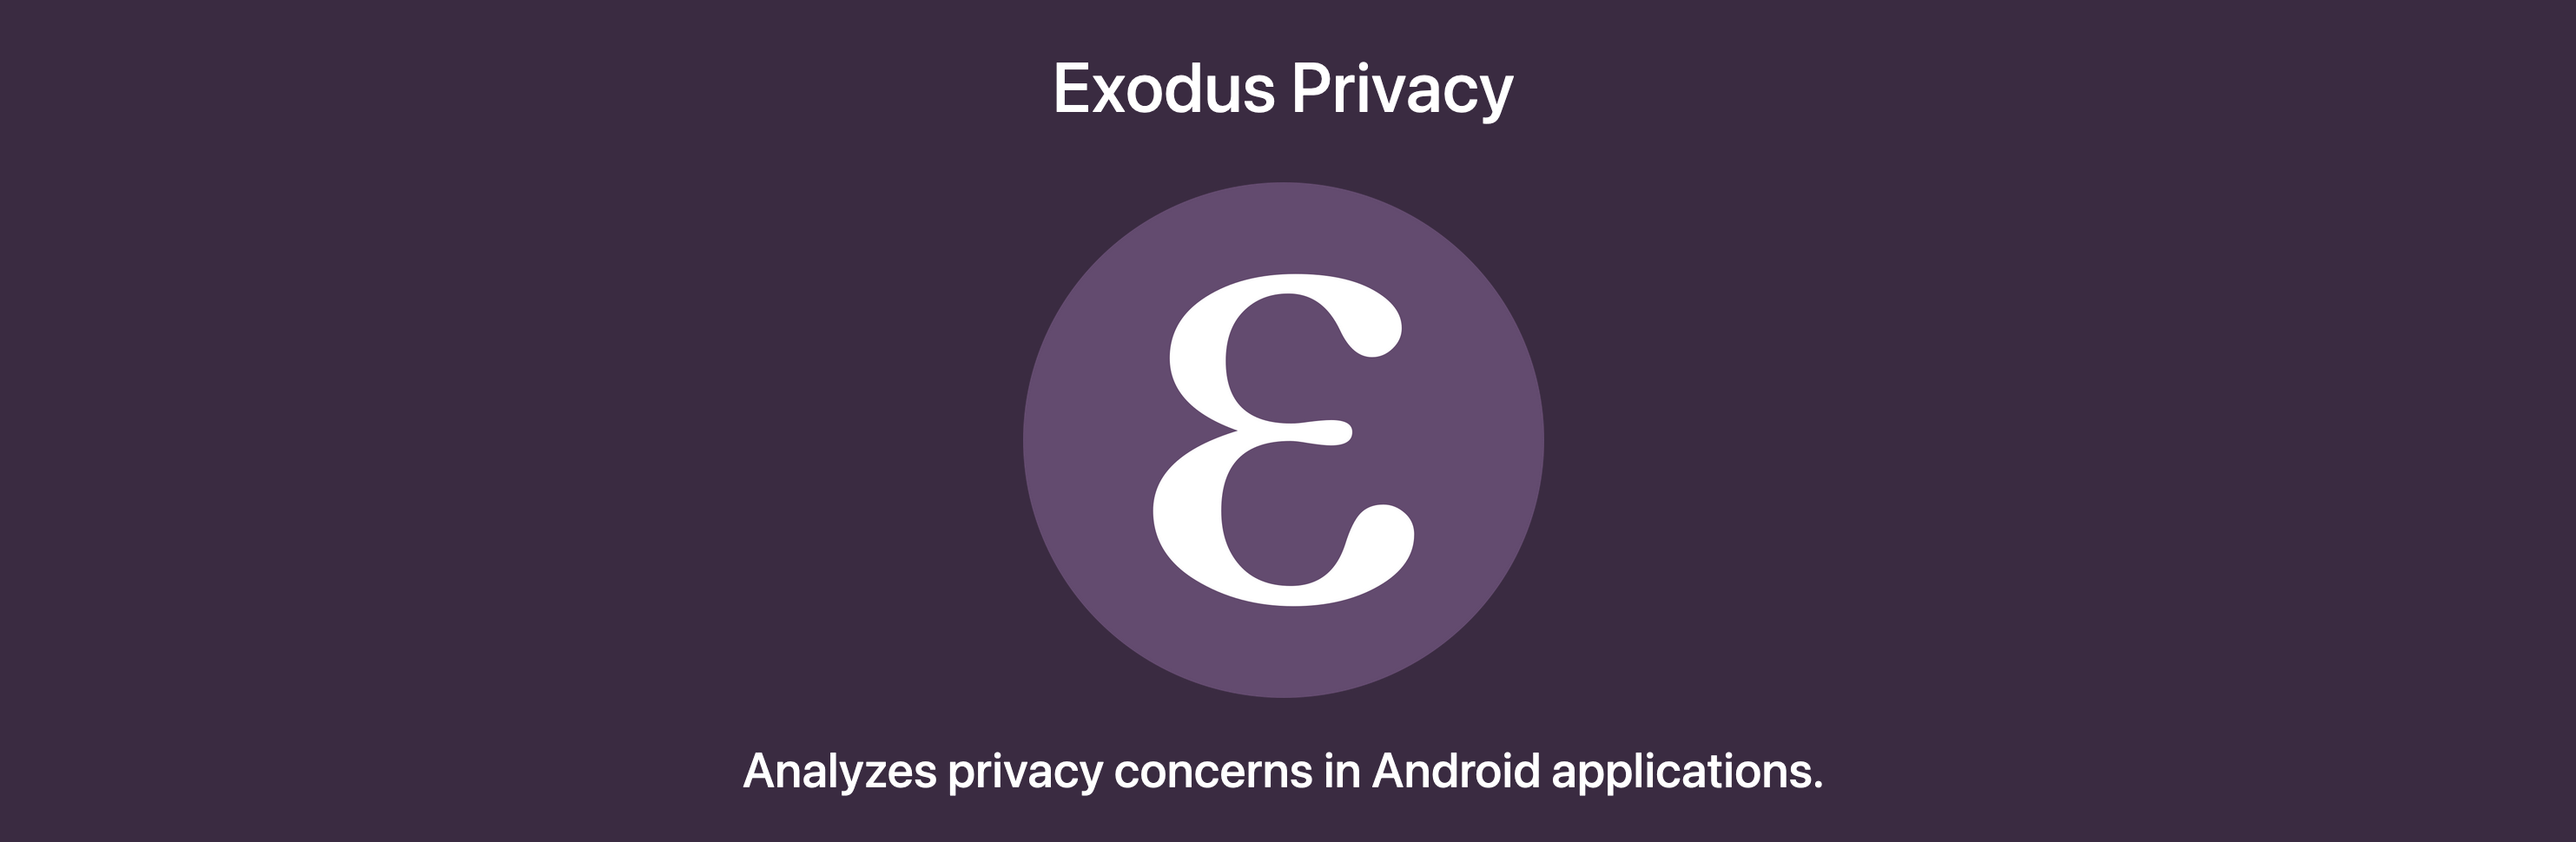 Exodus Privacy's website's homepage